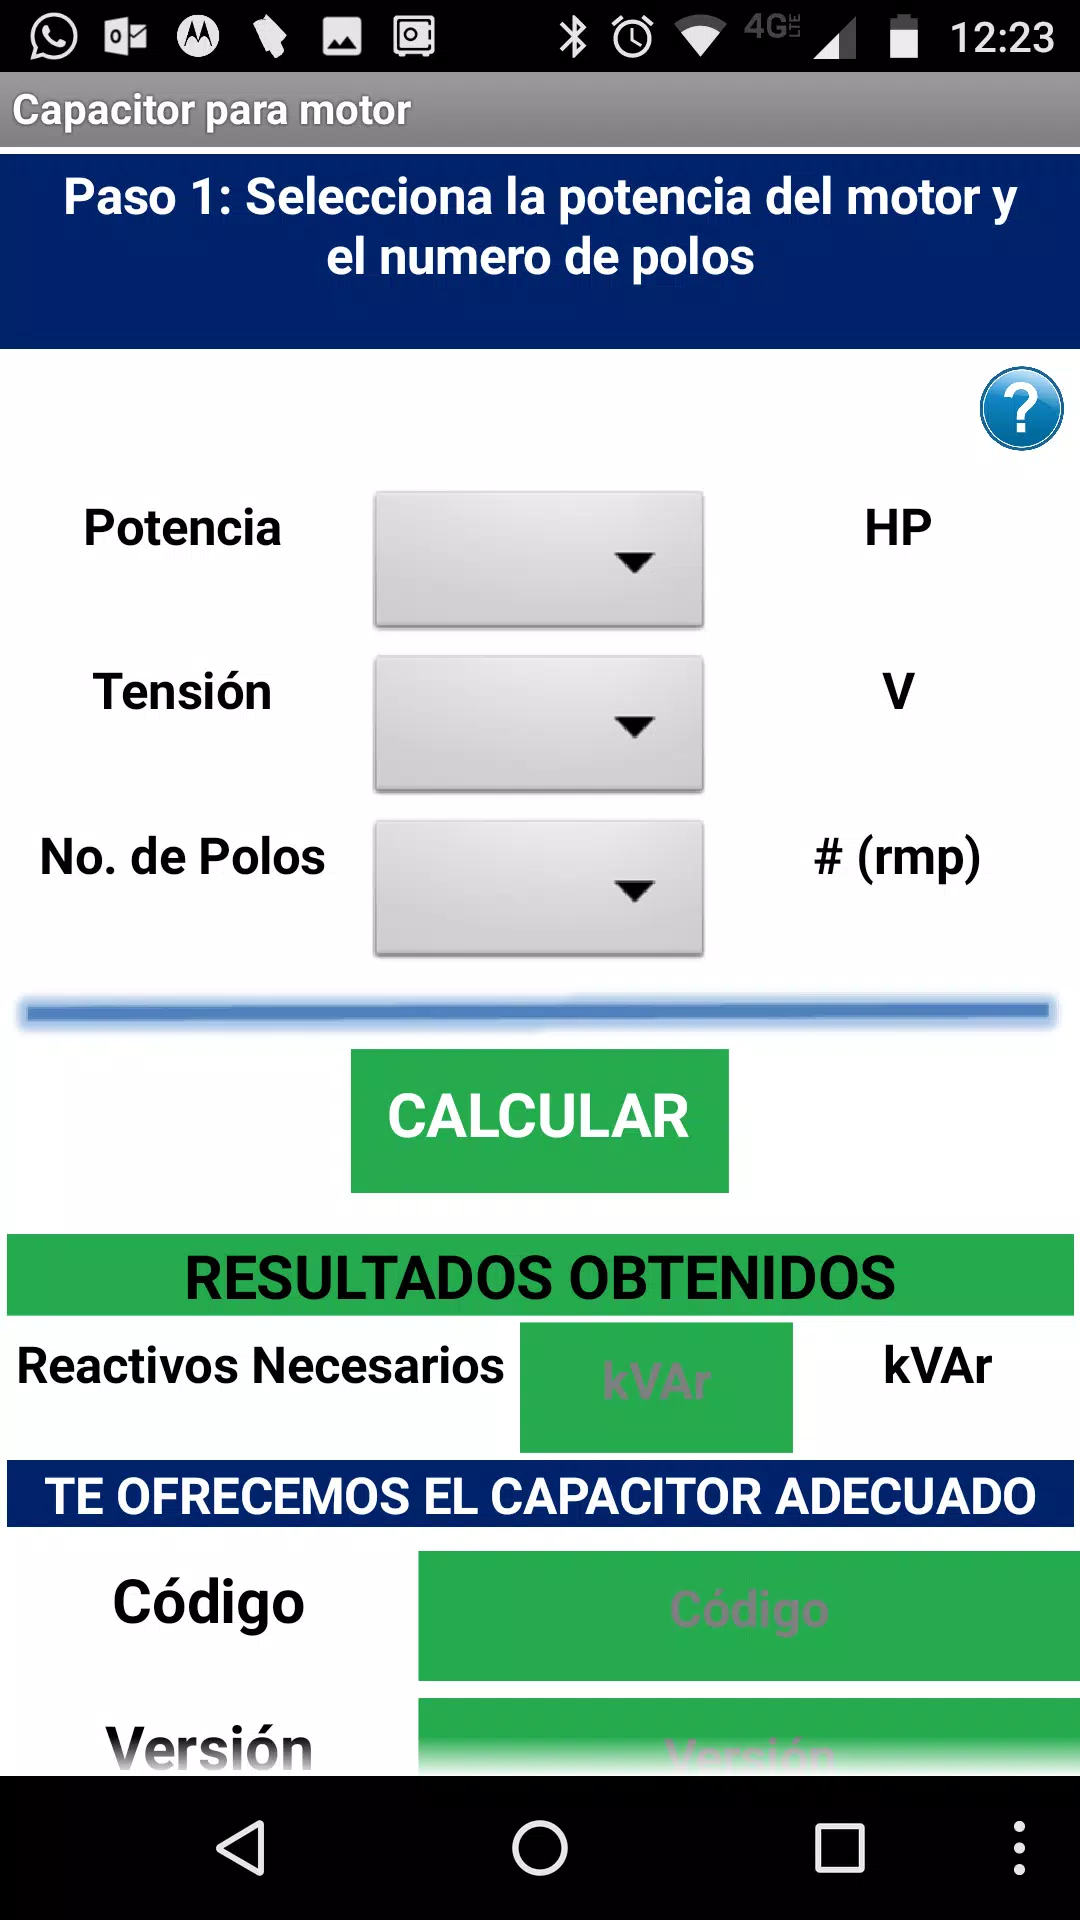 Download do APK de Calculadora kVAr para Android